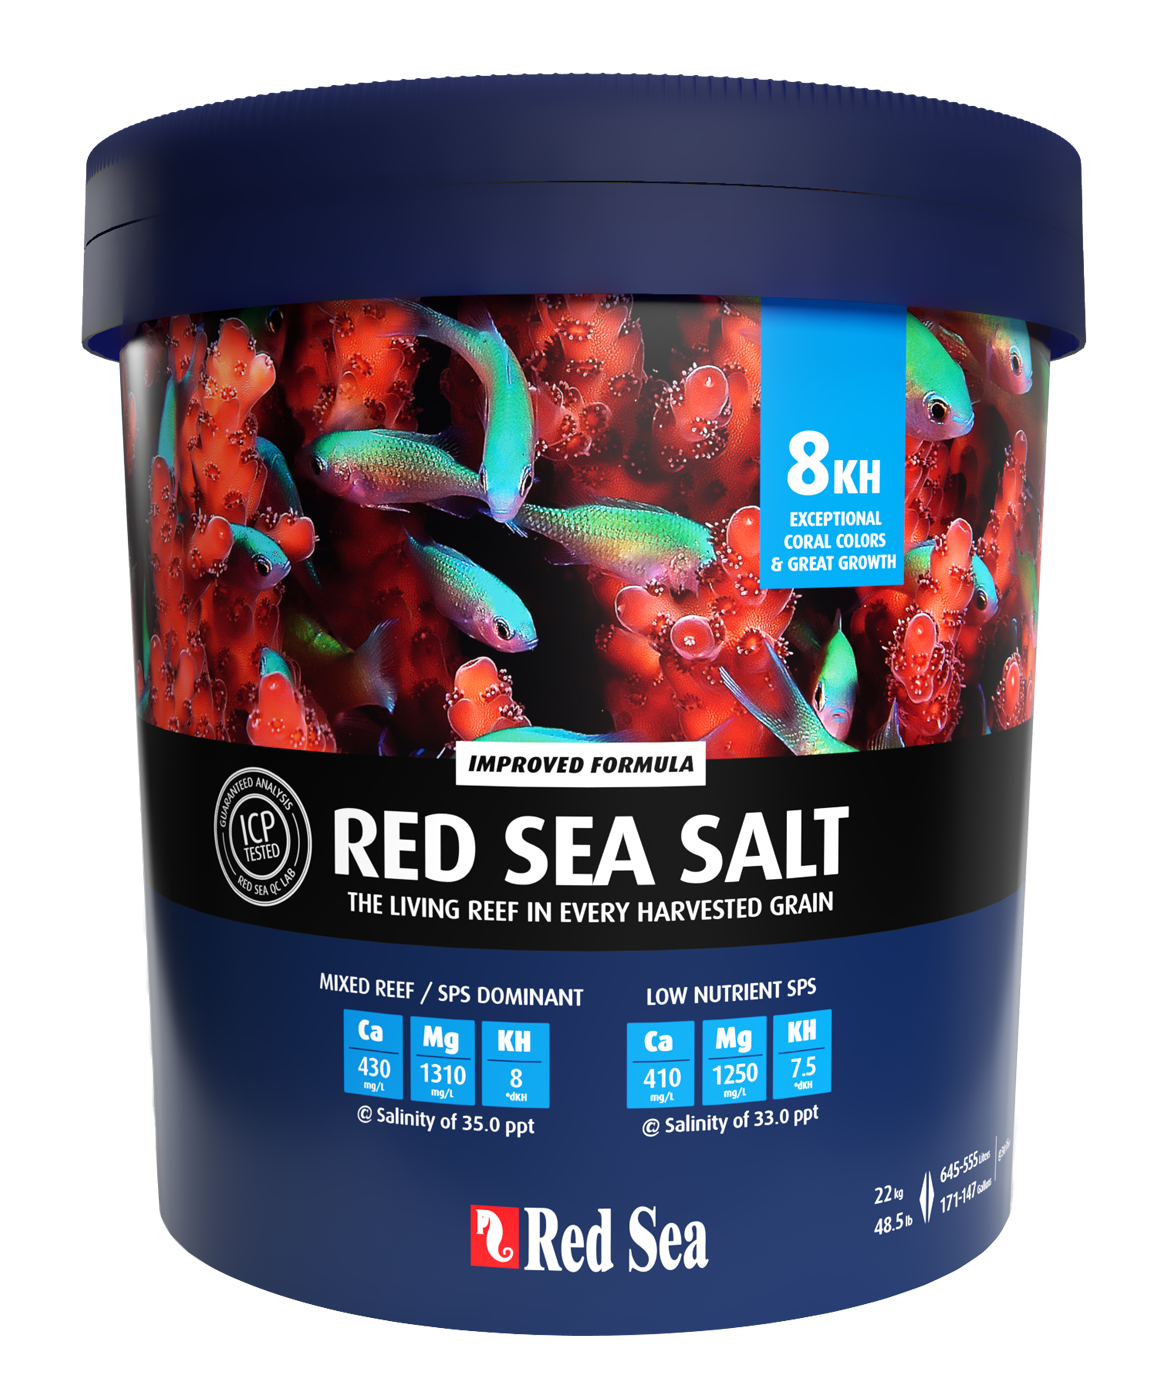 Red Sea Salt 55g mix bucket.